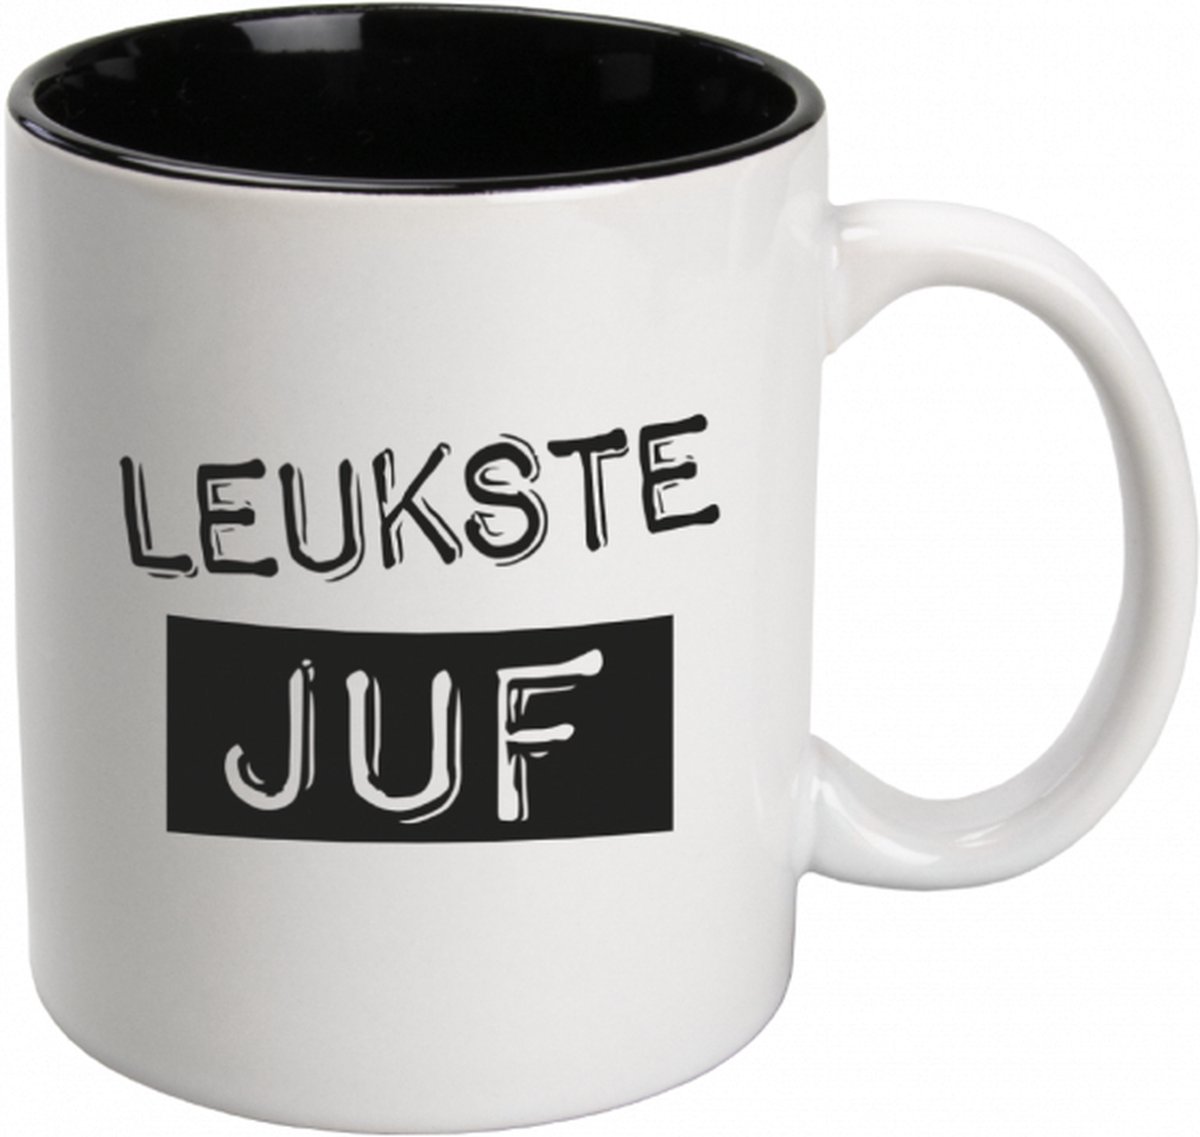 Mok - Zwart Wit - Leukste Juf - Gevuld met verpakte toffees - In cadeauverpakking met krullint